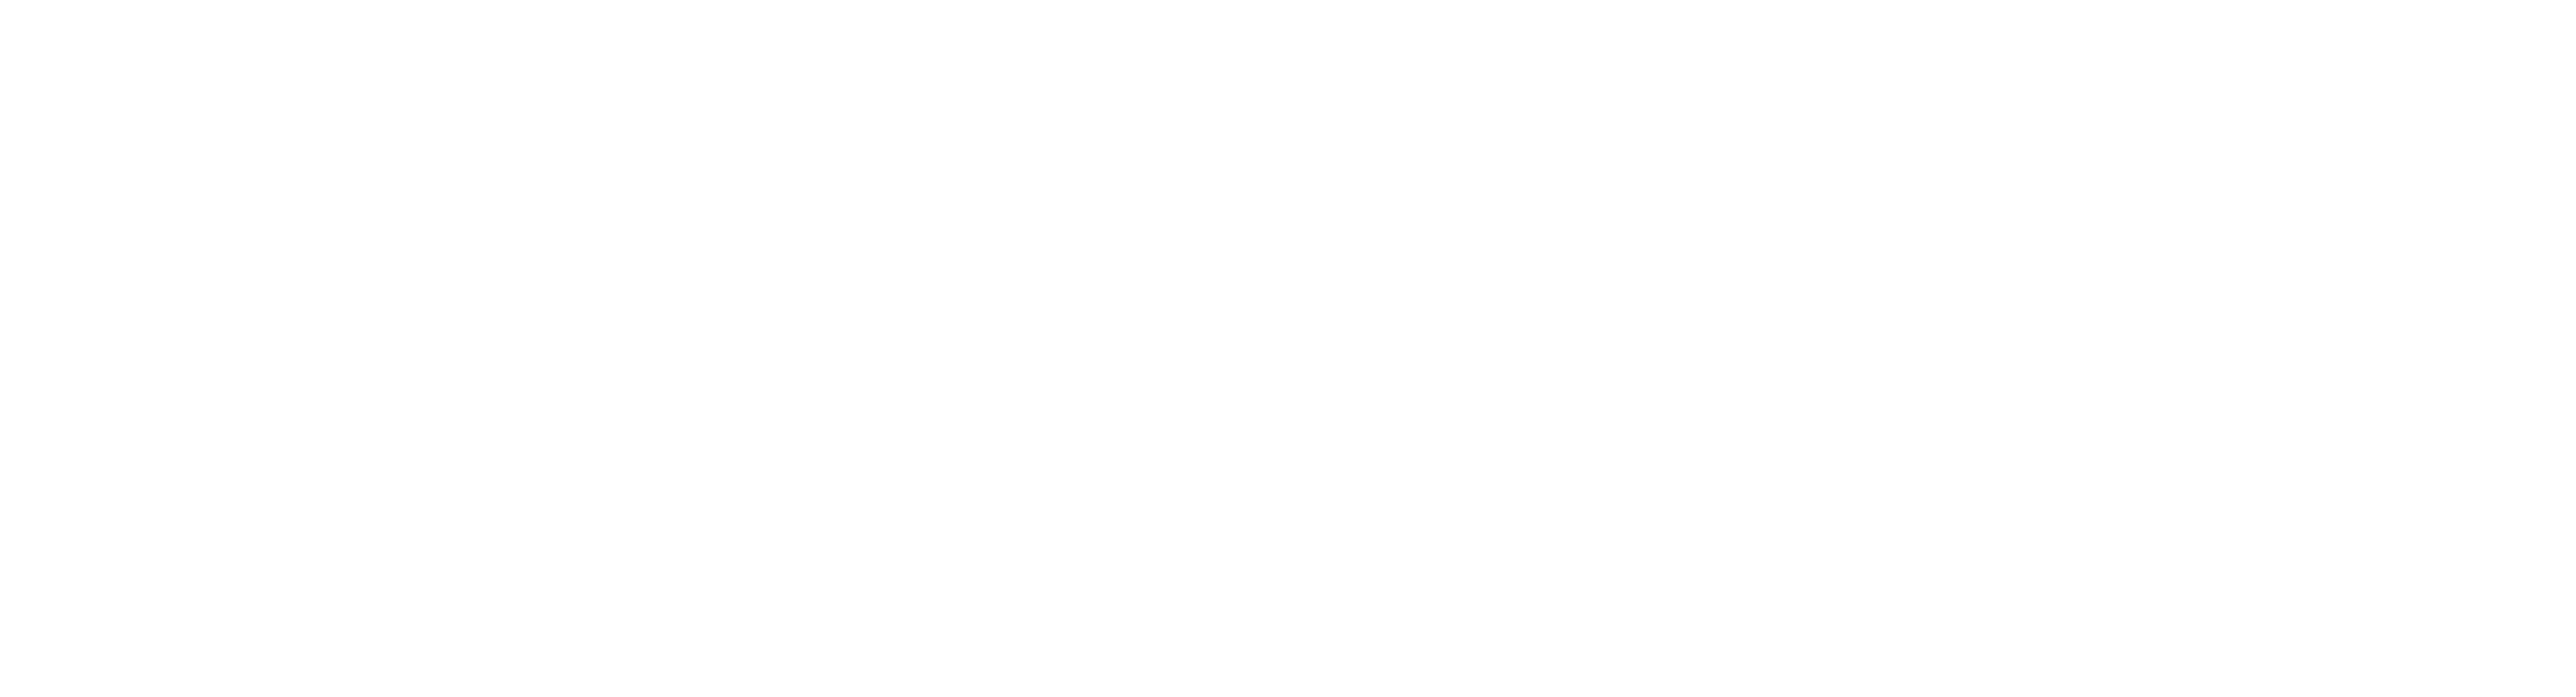 Edgewood Capital